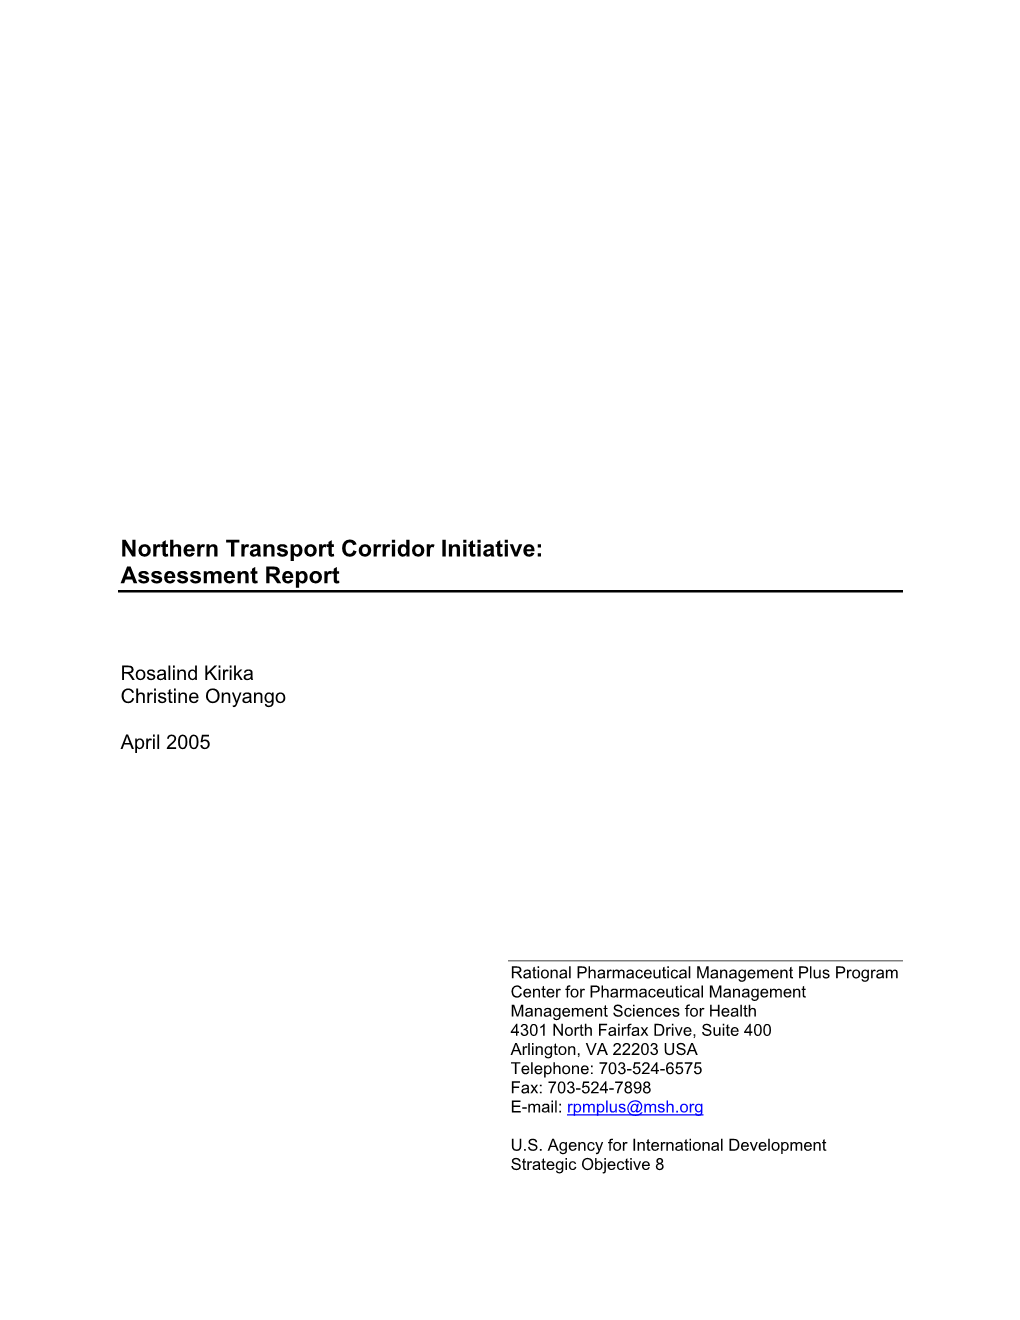 Northern Transport Corridor Initiative: Assessment Report